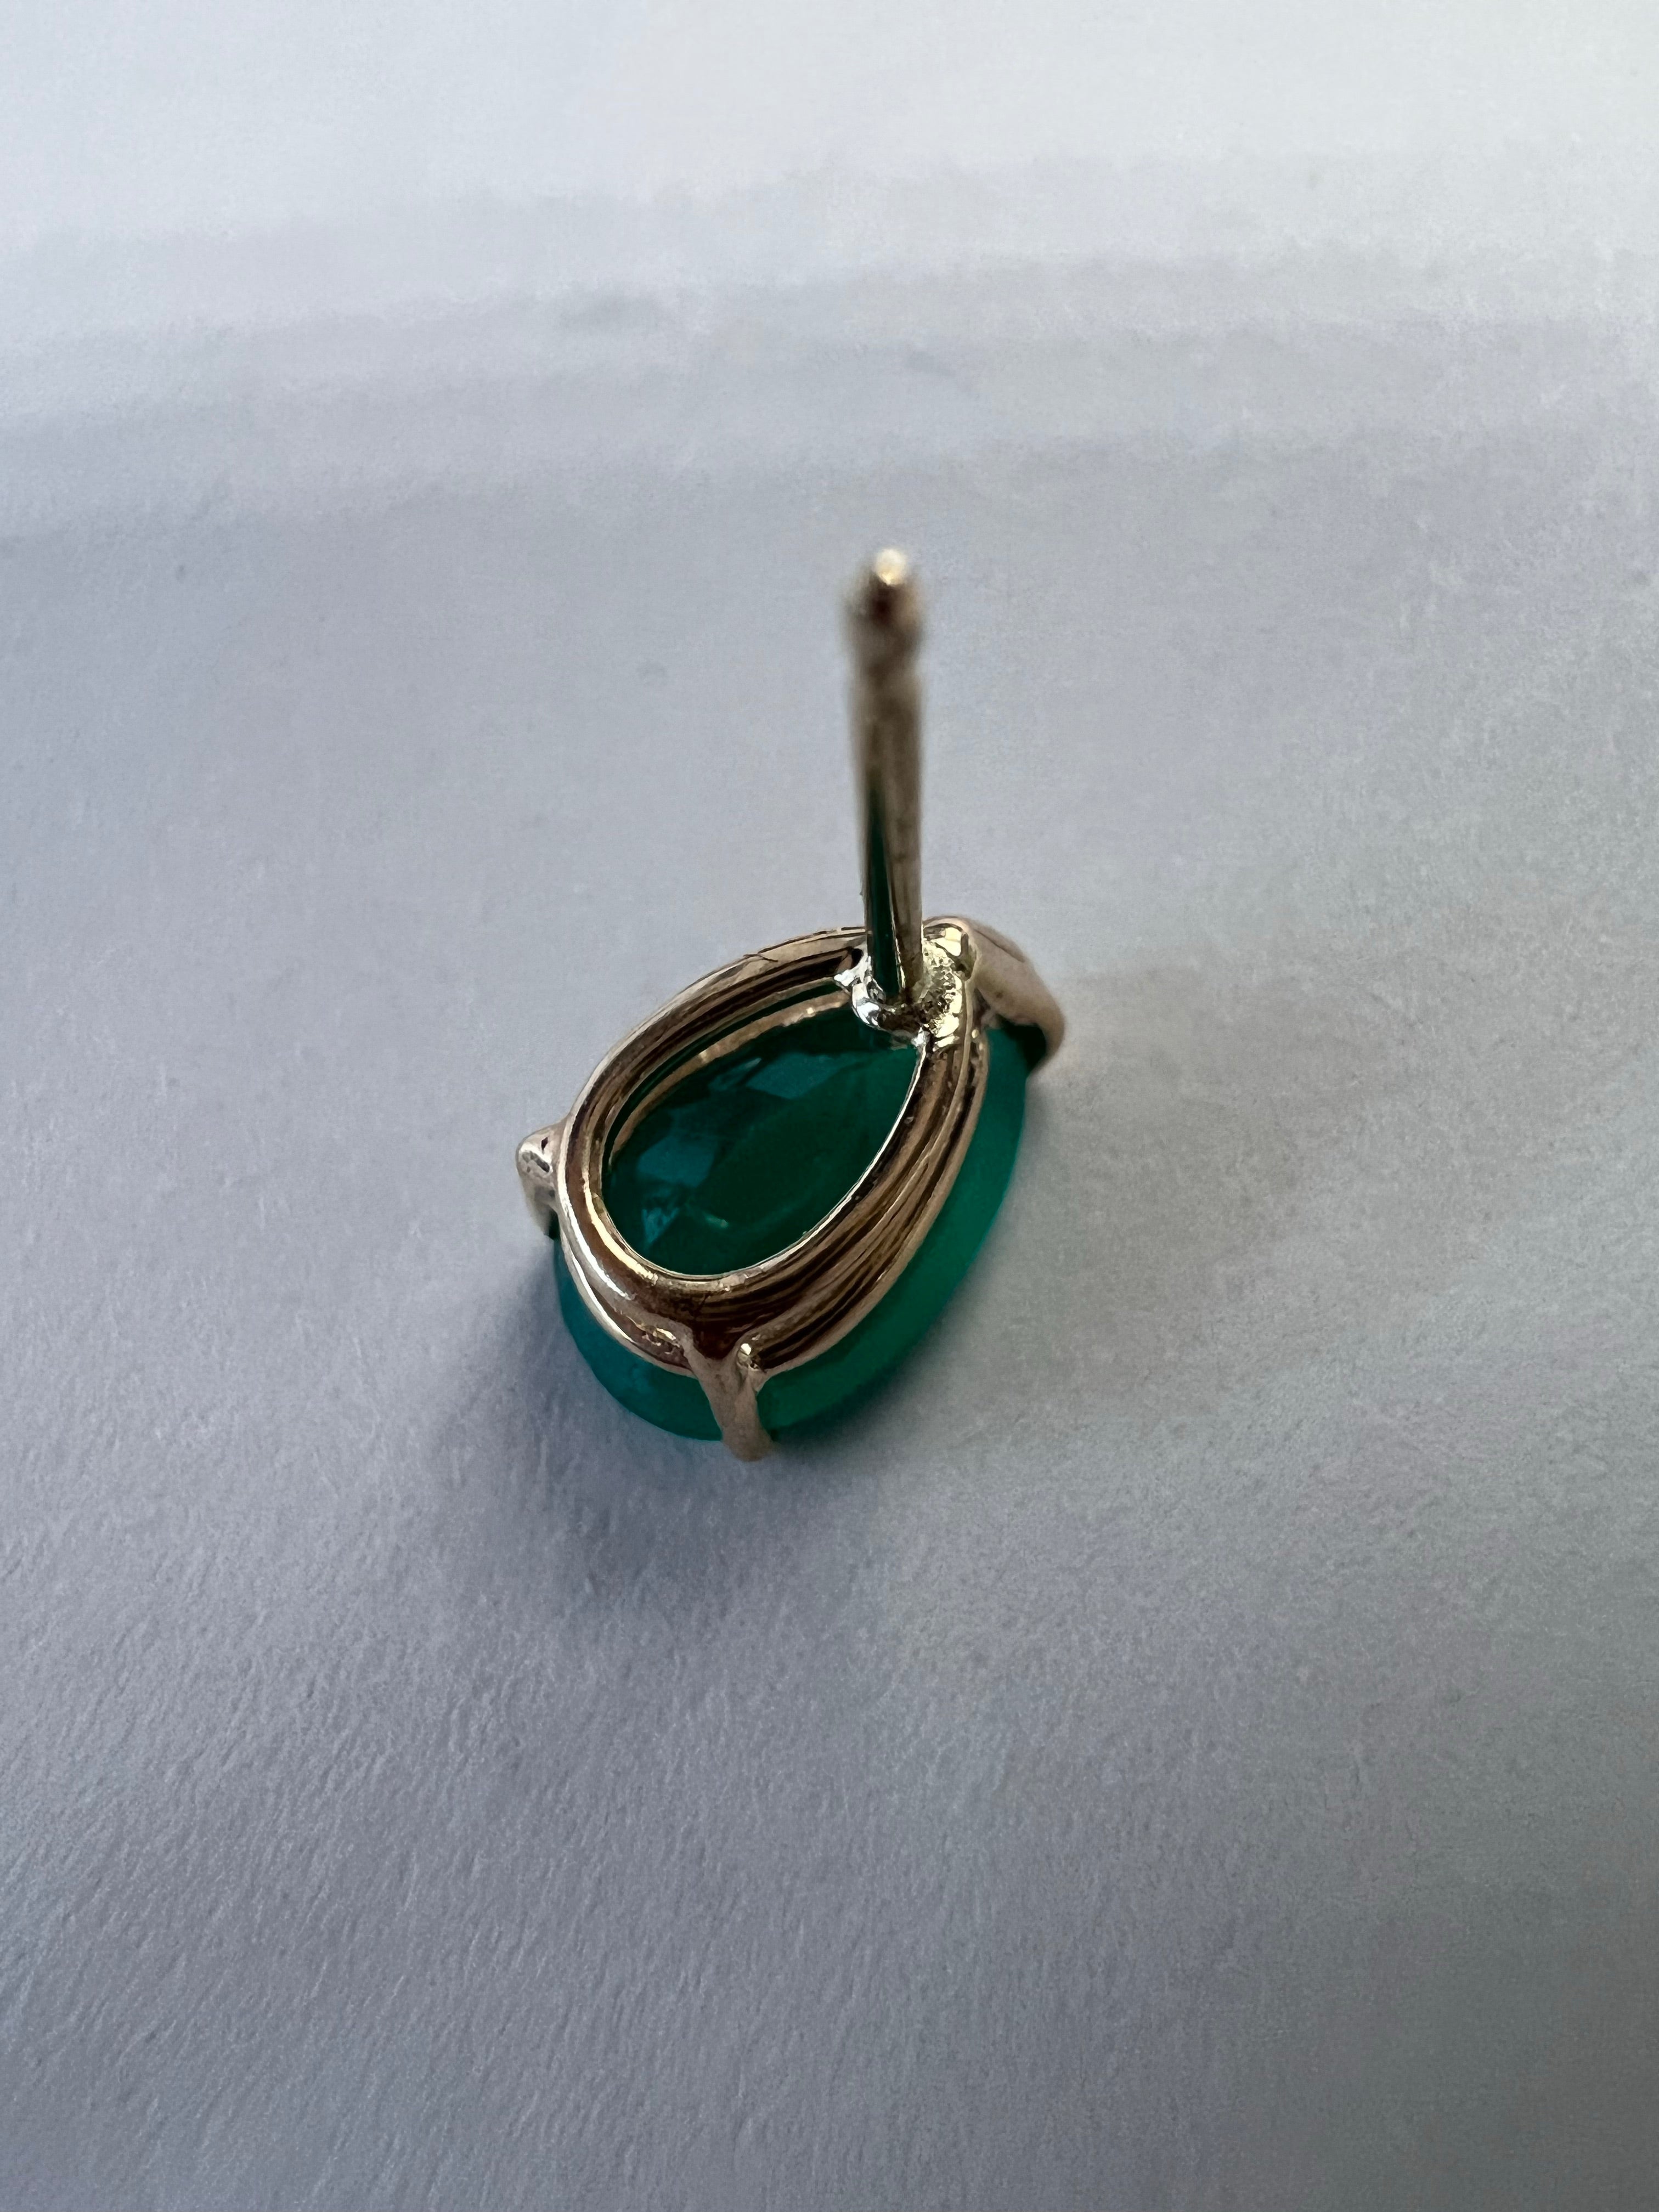 2.4CT Colombian Emerald Pear 14K Yellow Gold Stud Earrings